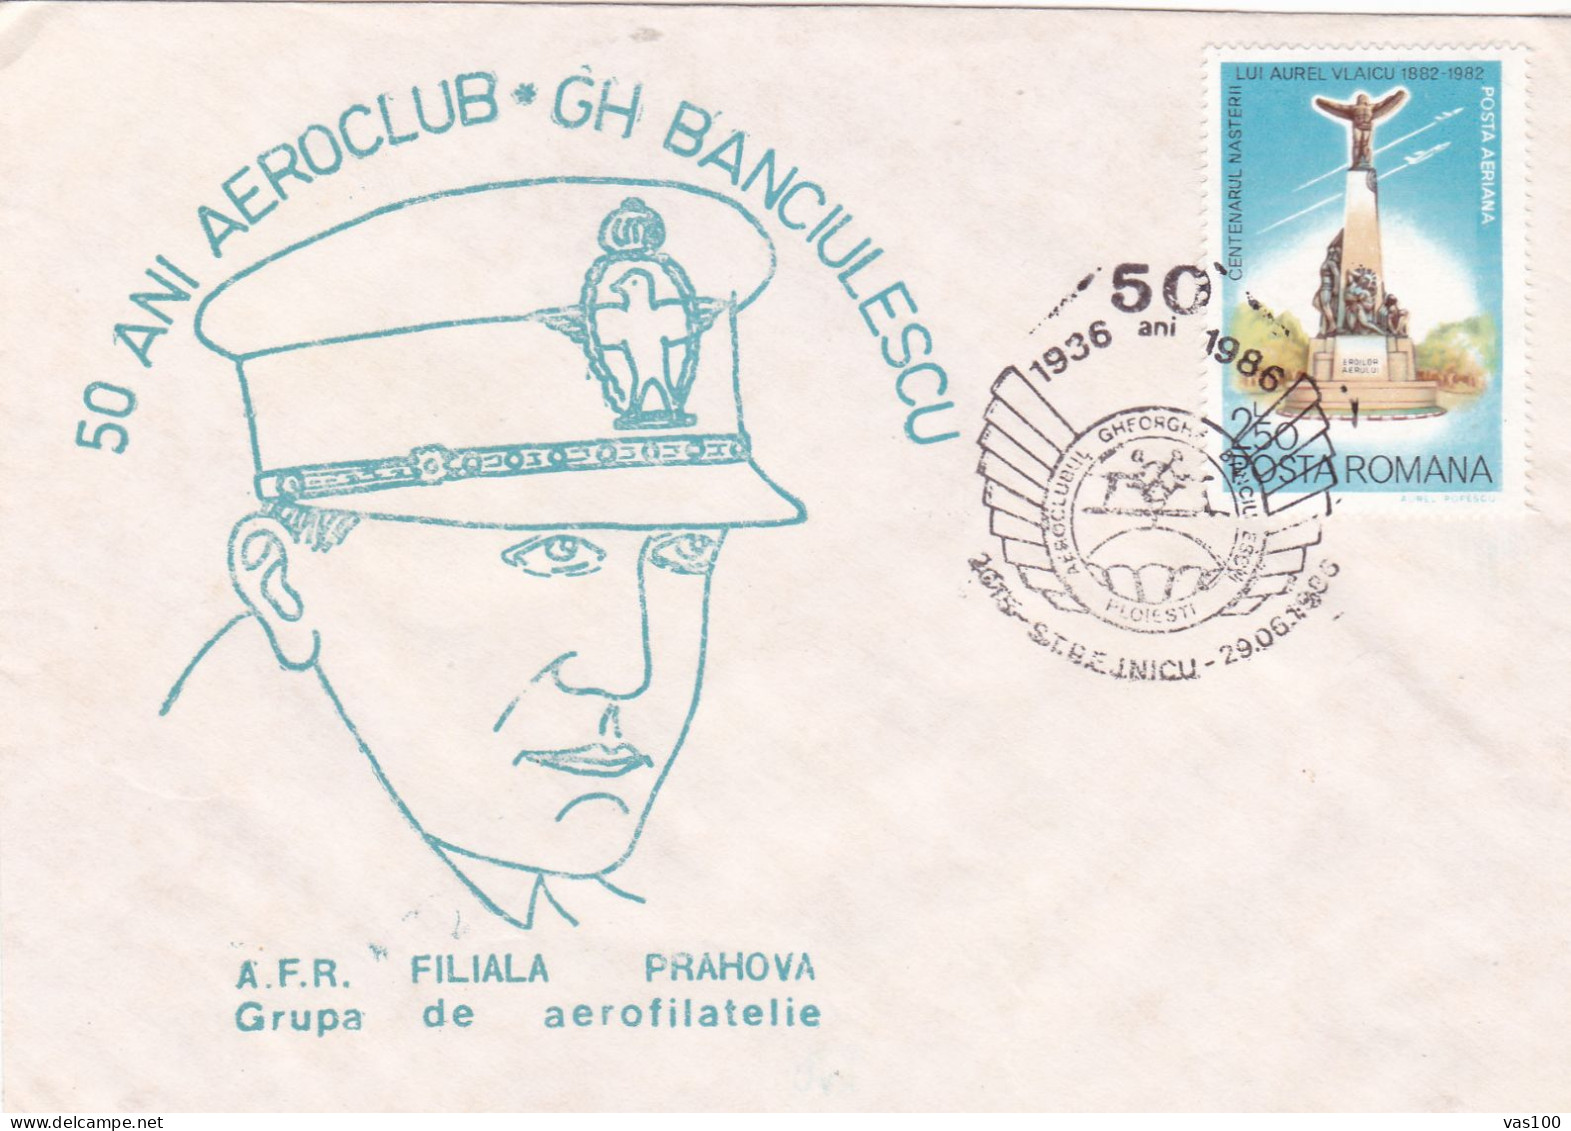 AVIATION CAPTAIN GH BANCIULESCU COVERS   STATIONERY 1986 ROMANIA - Storia Postale